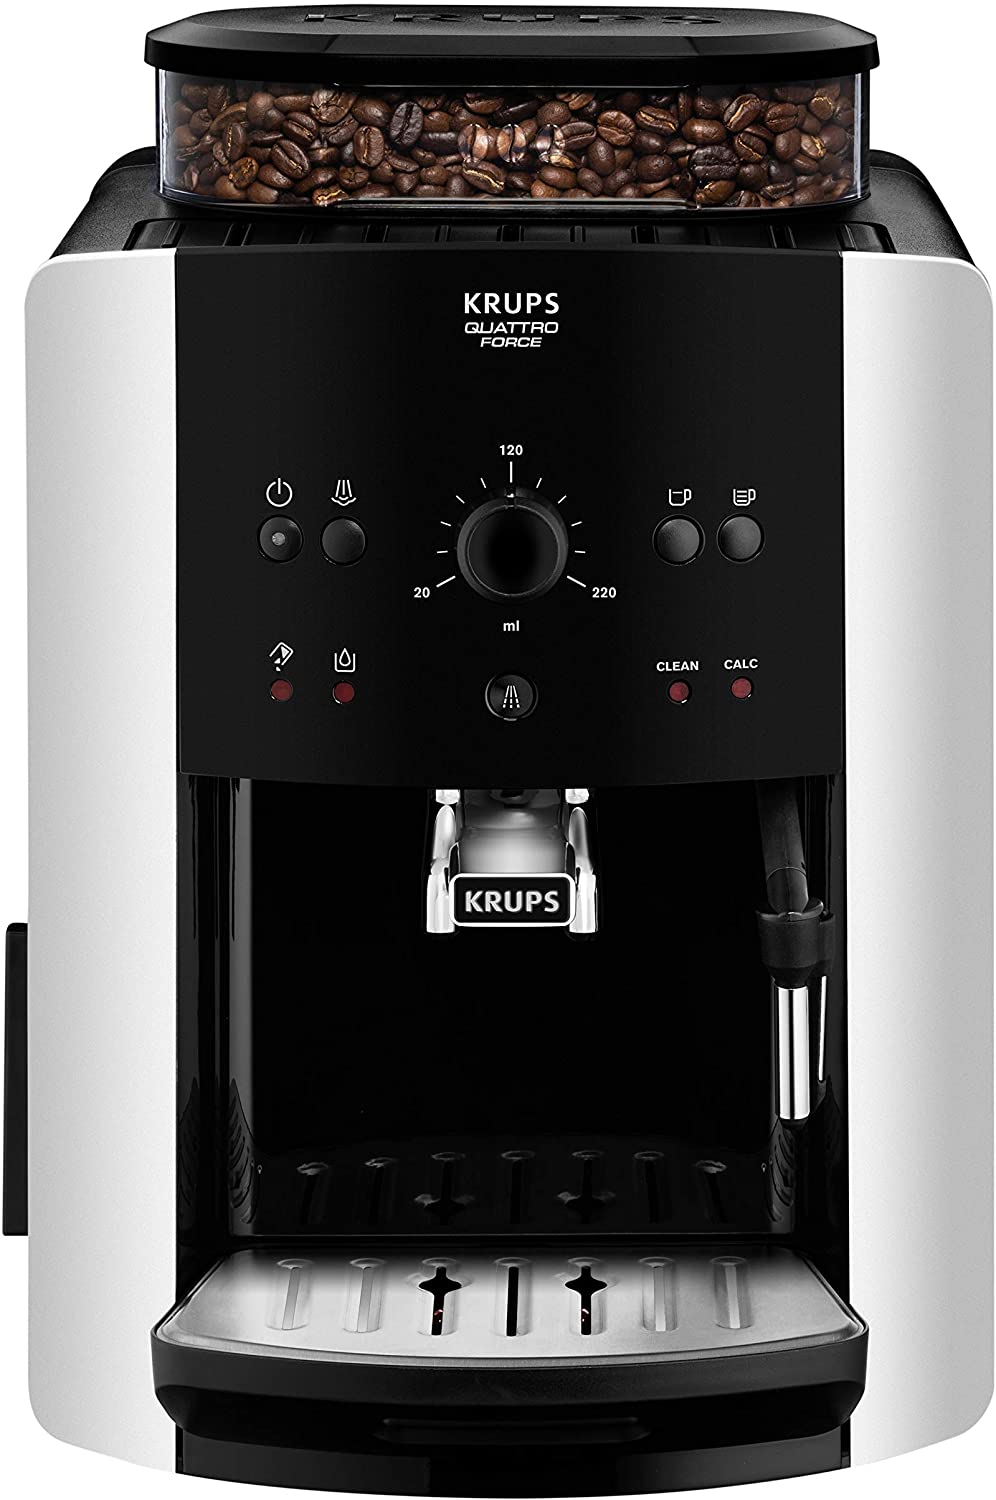 Krups Arabica Picto Quattro Force Fully Automatic Coffee Machine